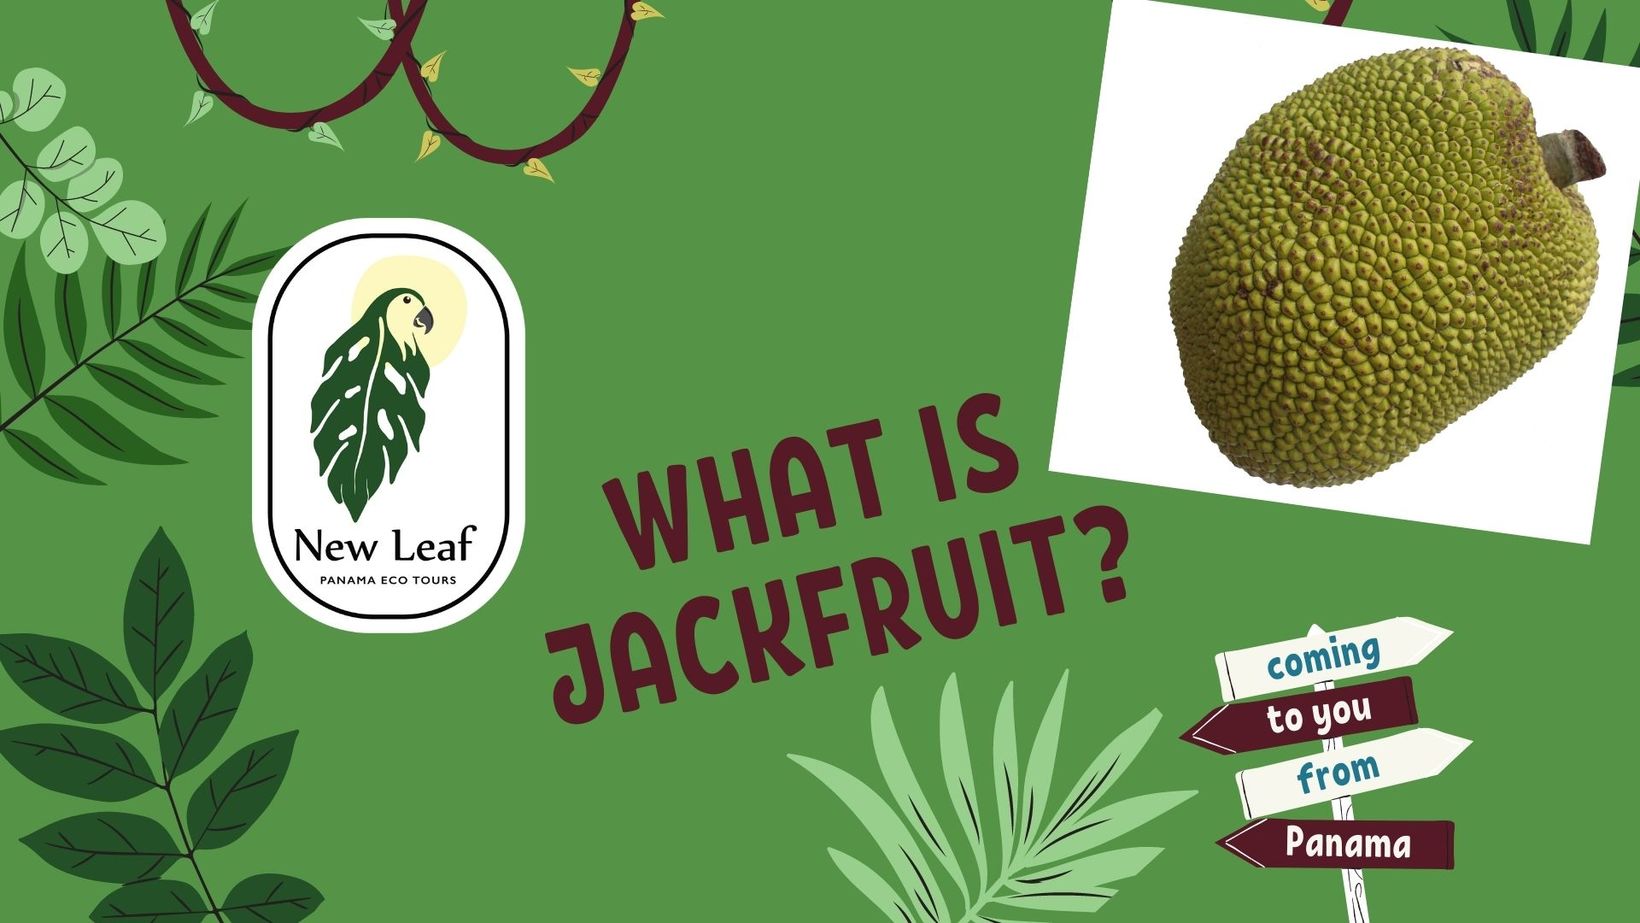 Jackfruit in Panama